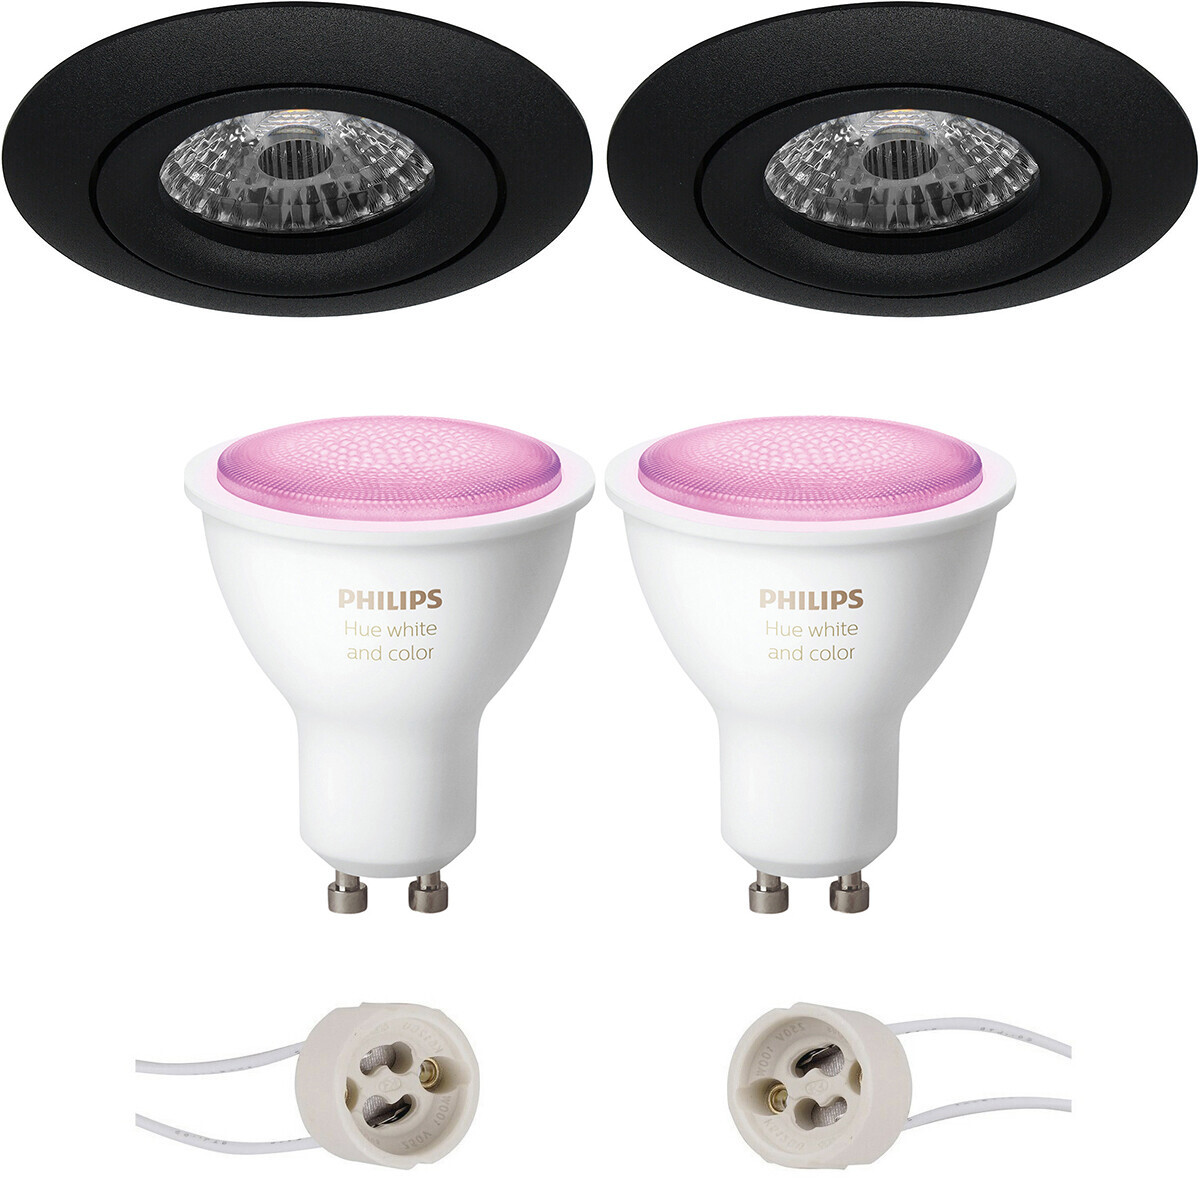 Pragmi Uranio Pro - Inbouw Rond - Mat Zwart - Kantelbaar - Ø82mm - Philips Hue - LED Spot Set GU10 - White and Color Ambiance - Bluetooth